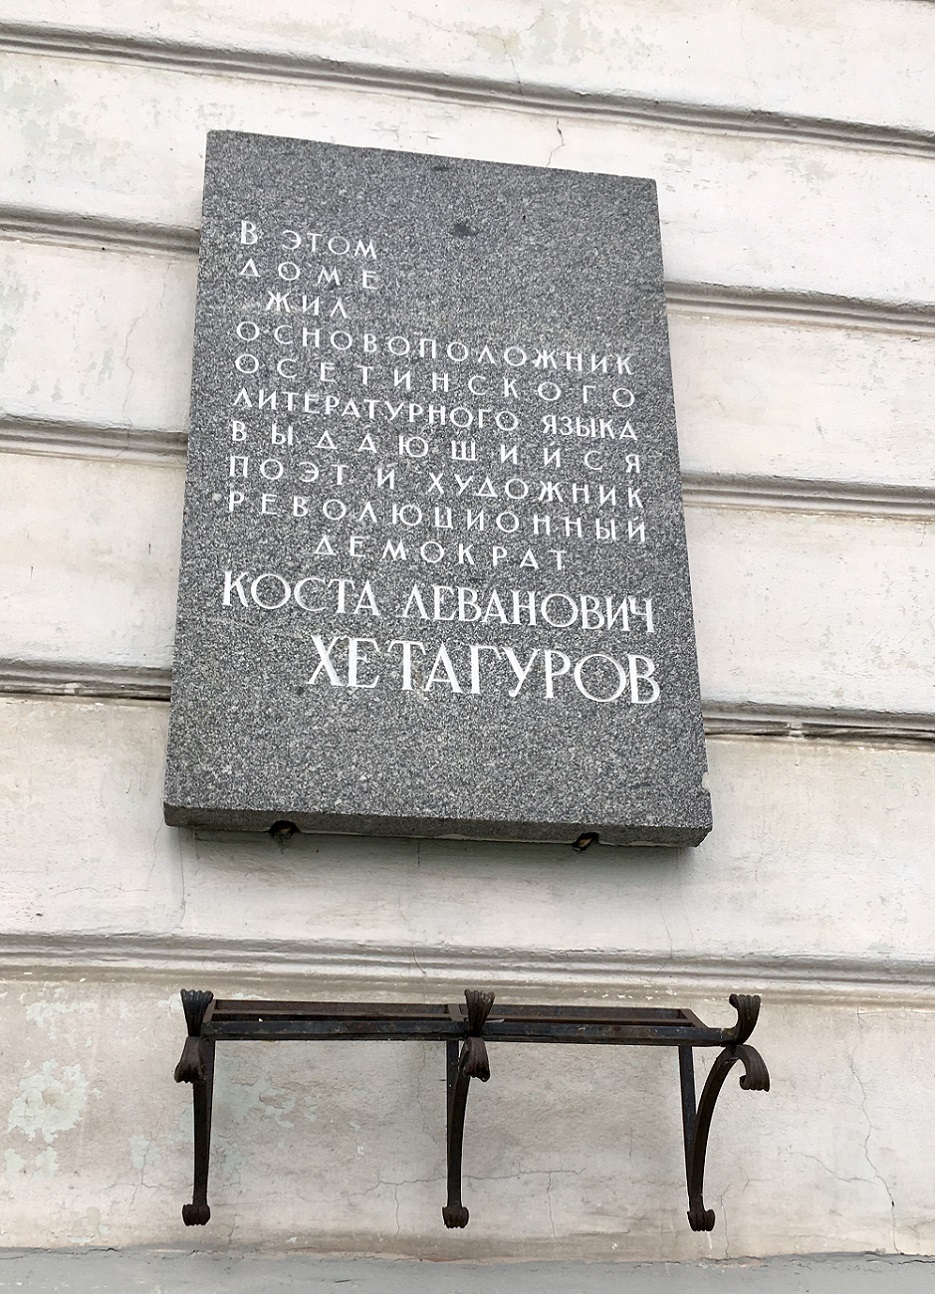 Petersburg, Миллионная улица, 18. Petersburg — Memorial plaques